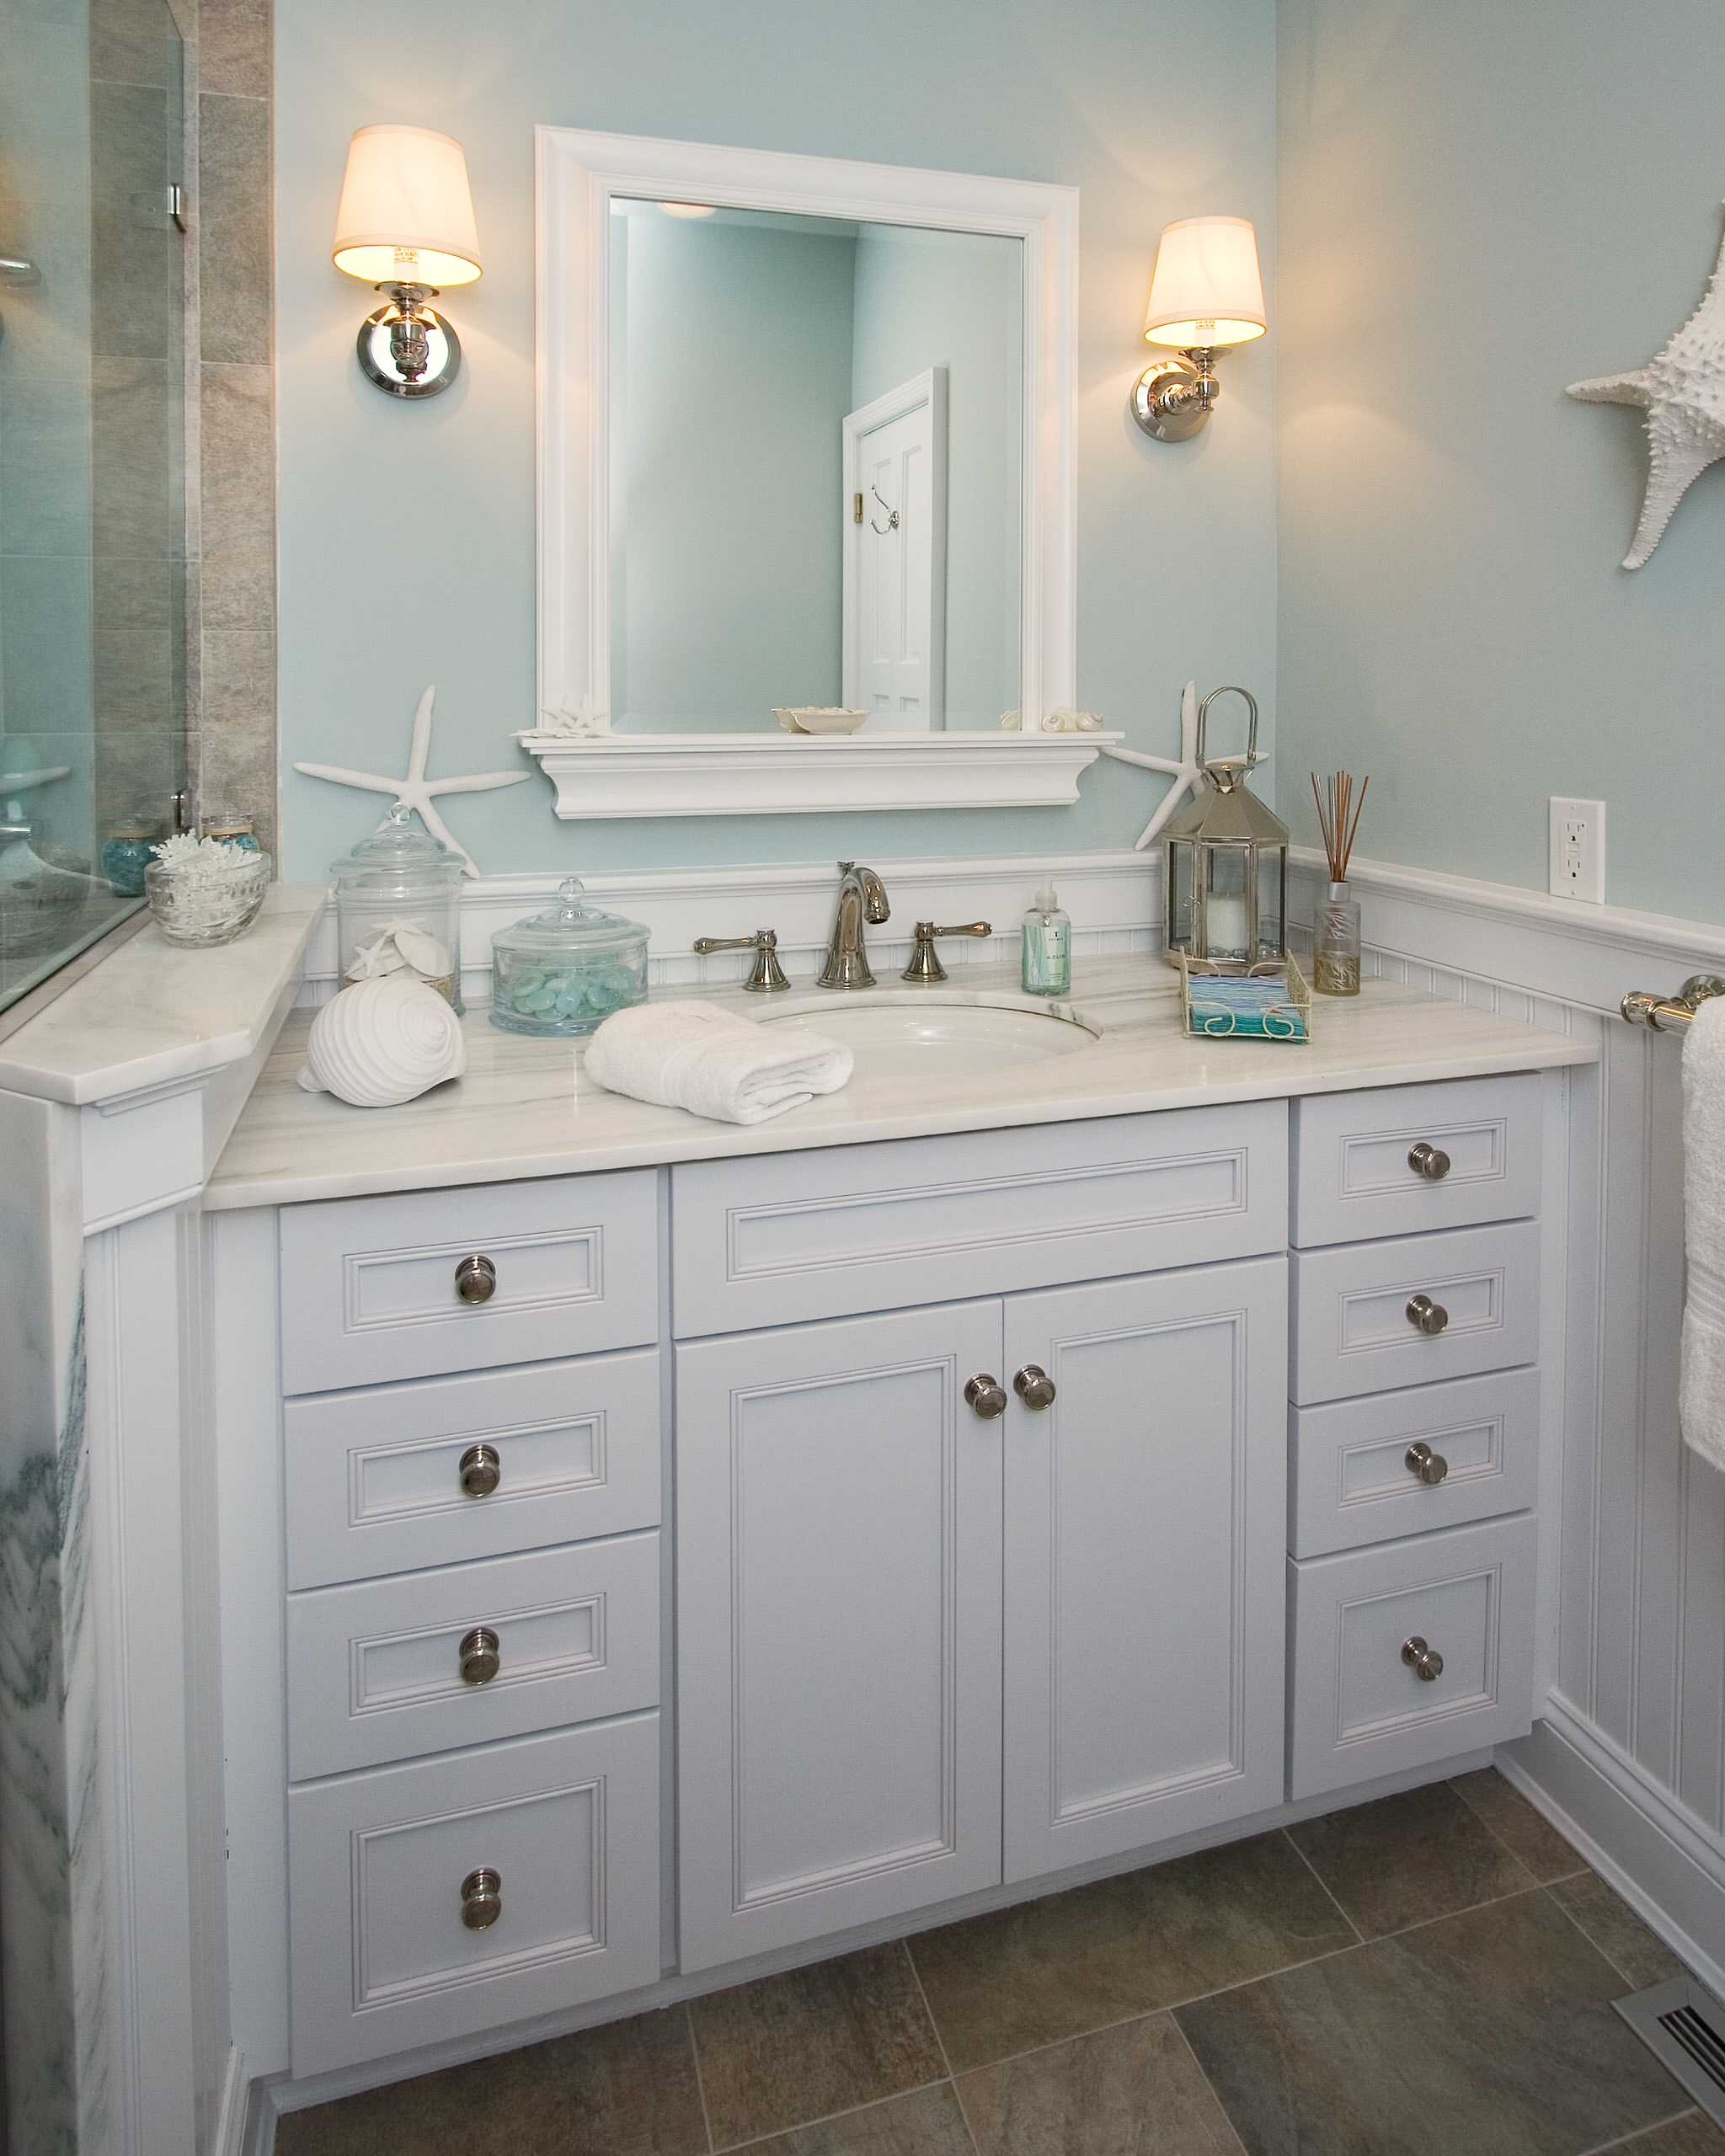 Turquoise bathroom vanity